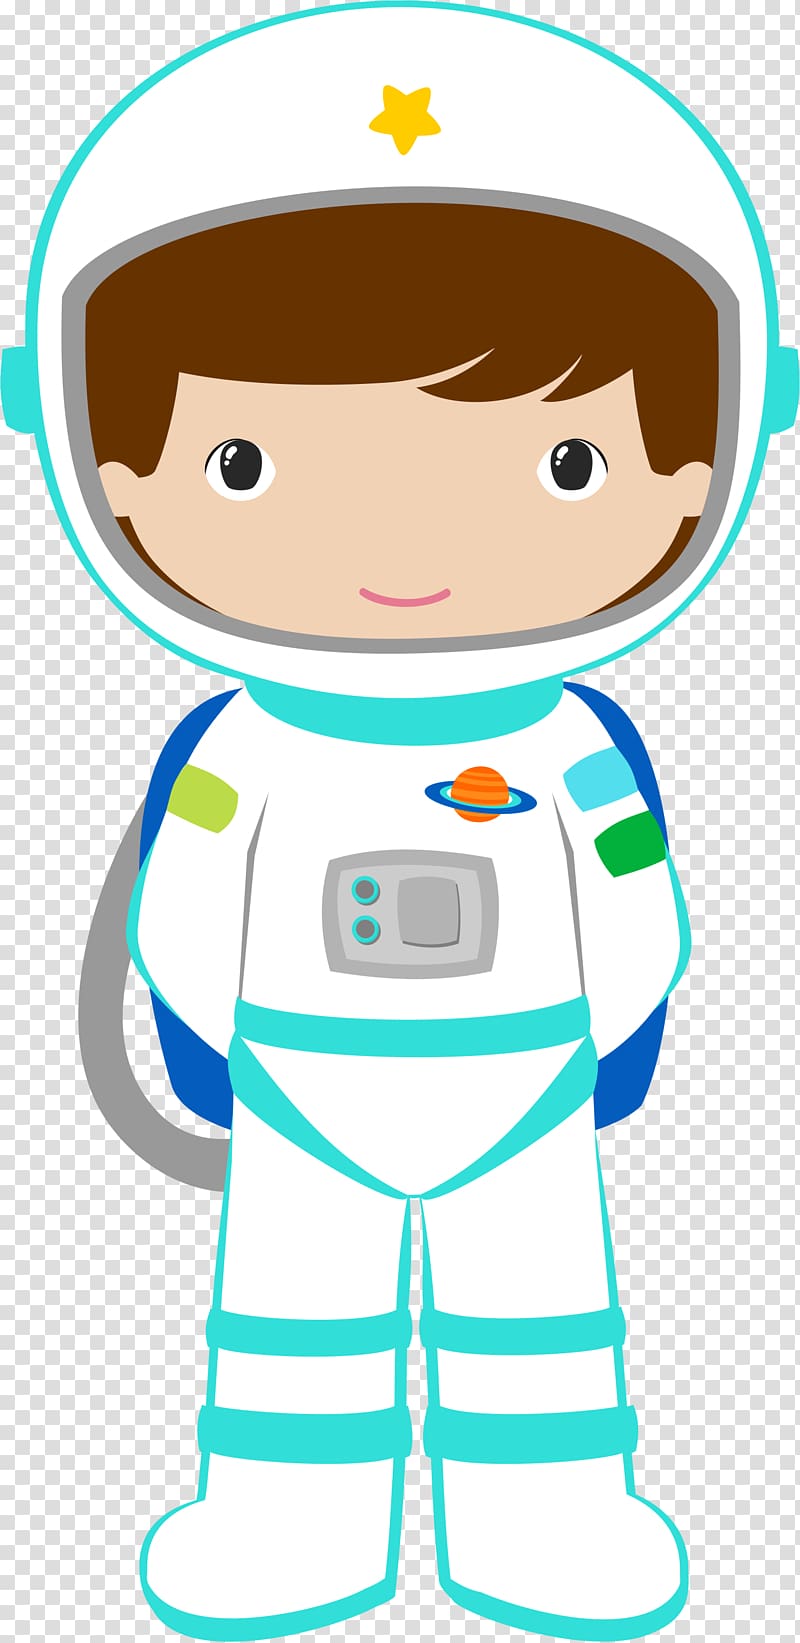 Astronaut clipart child, Astronaut child Transparent FREE